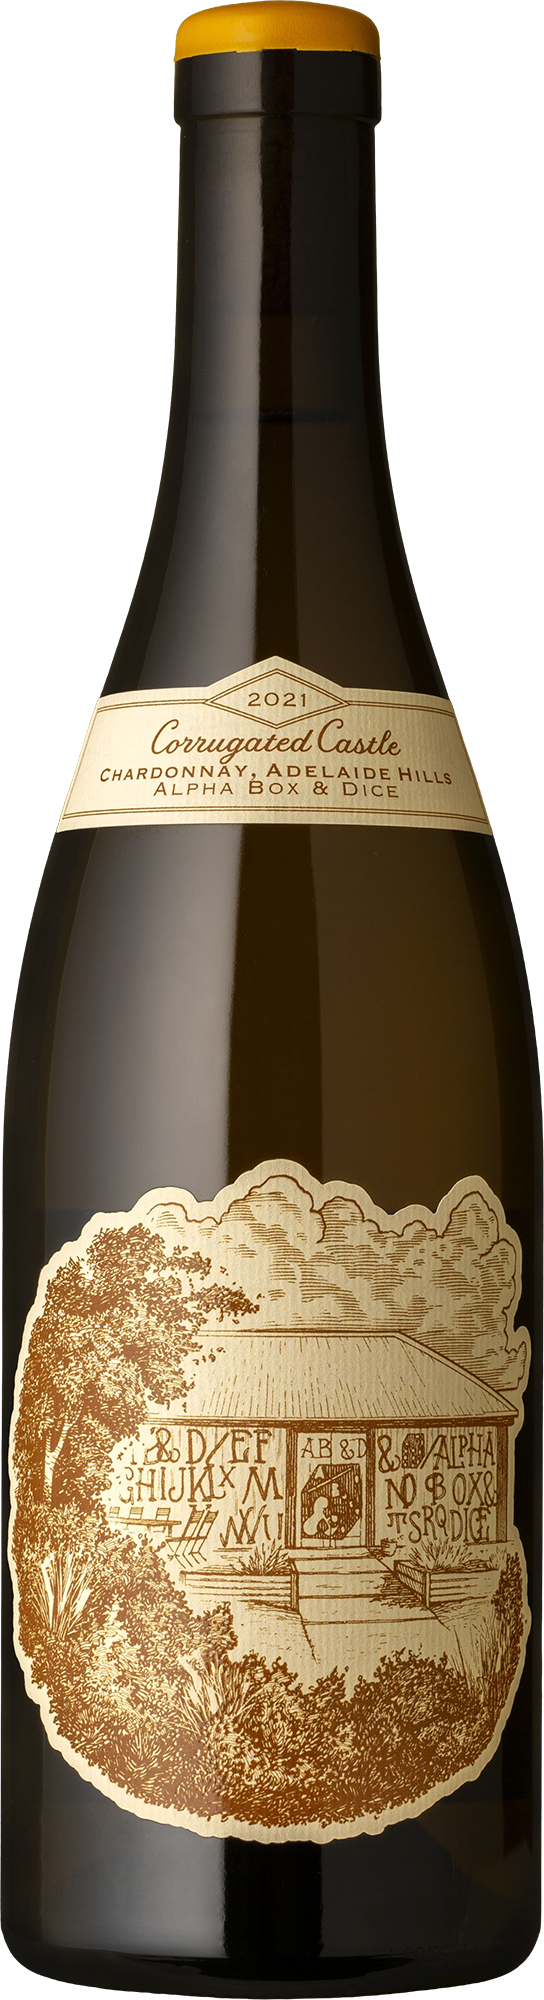 Alpha Box & Dice - Corrugated Castle Chardonnay 2021 White Wine